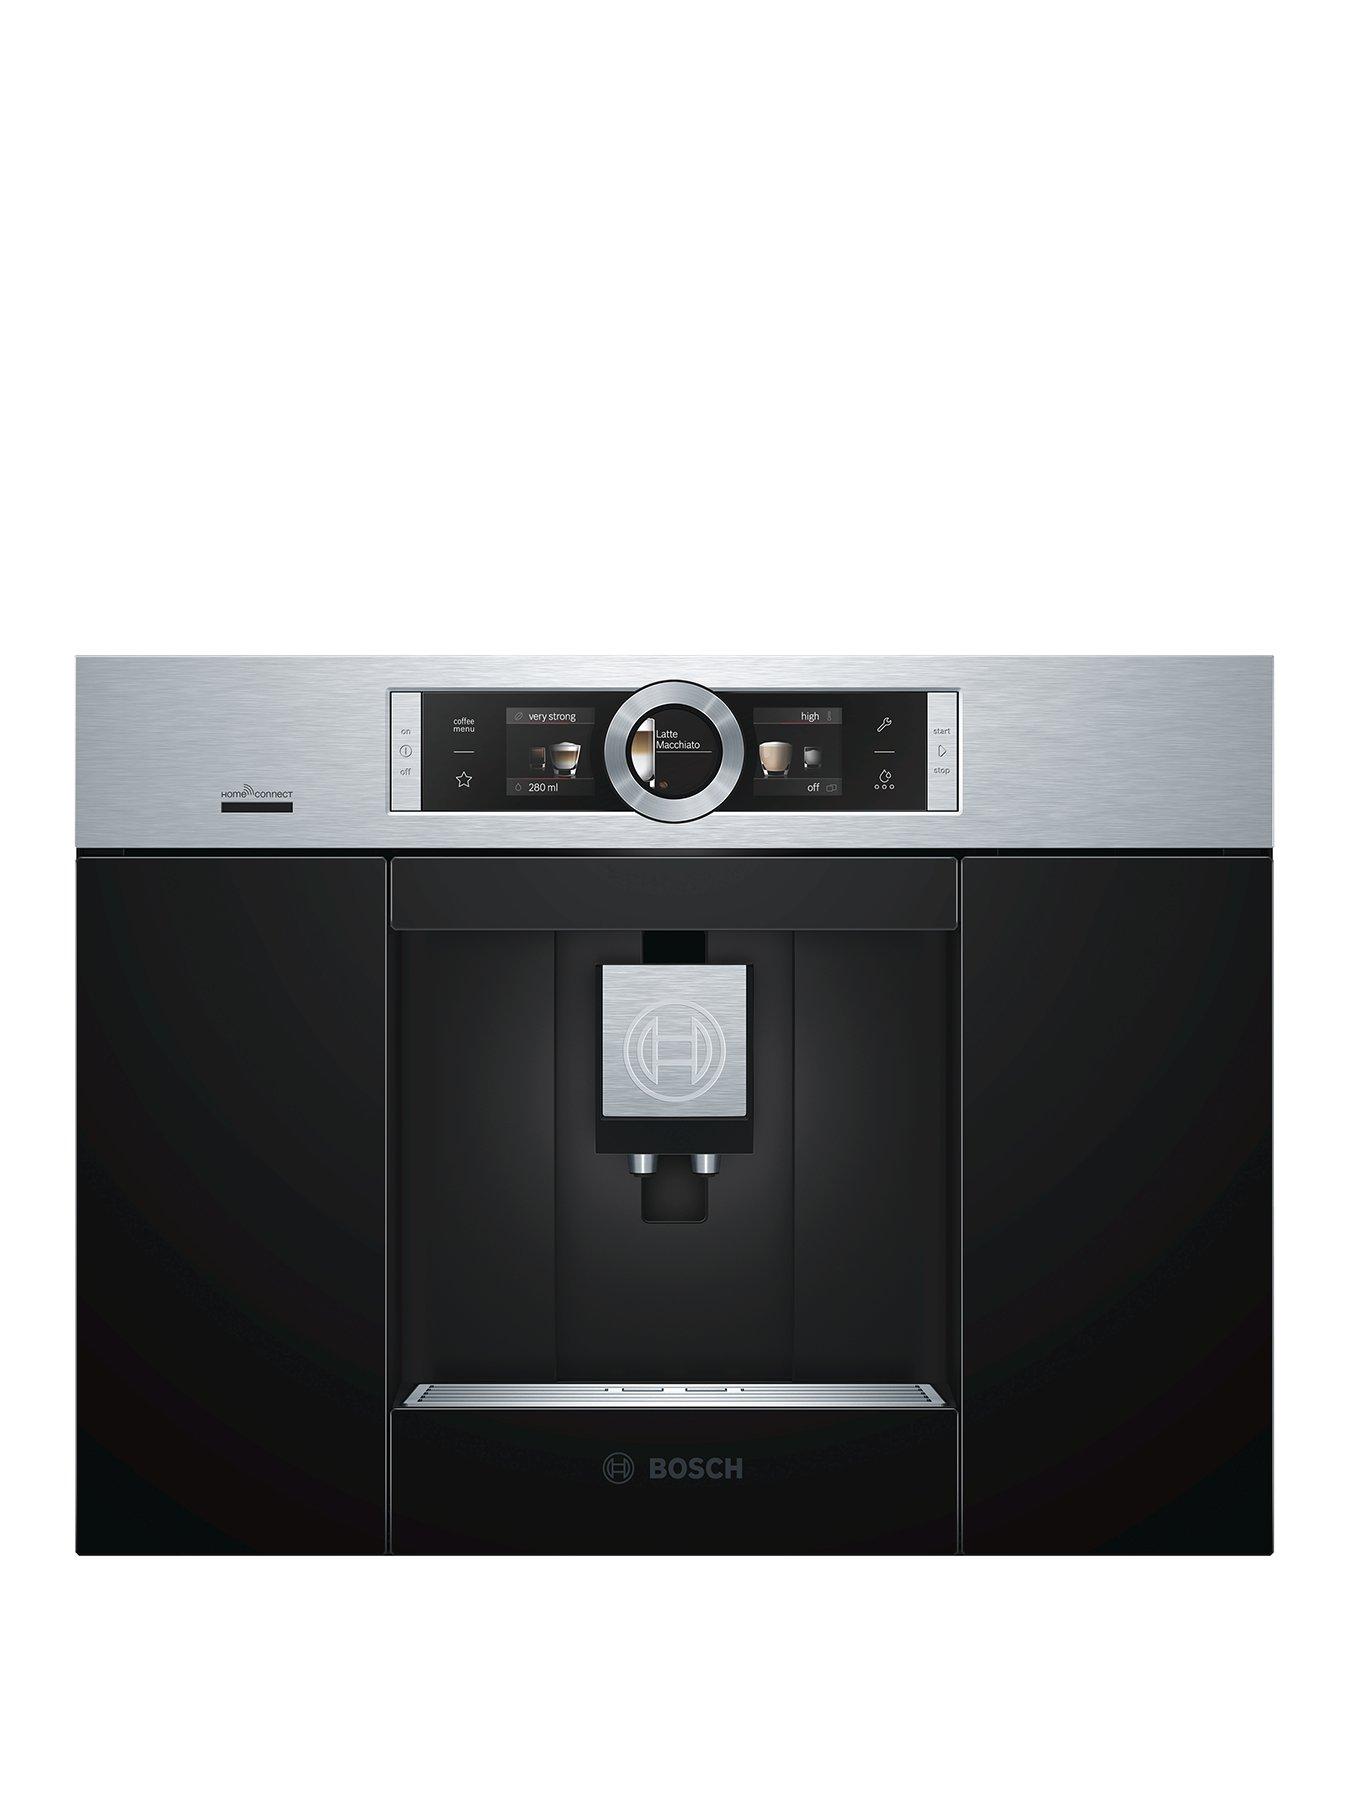 Bosch Serie 8 Ctl636Es6 Built-In Coffee Machine – Stainless Steel